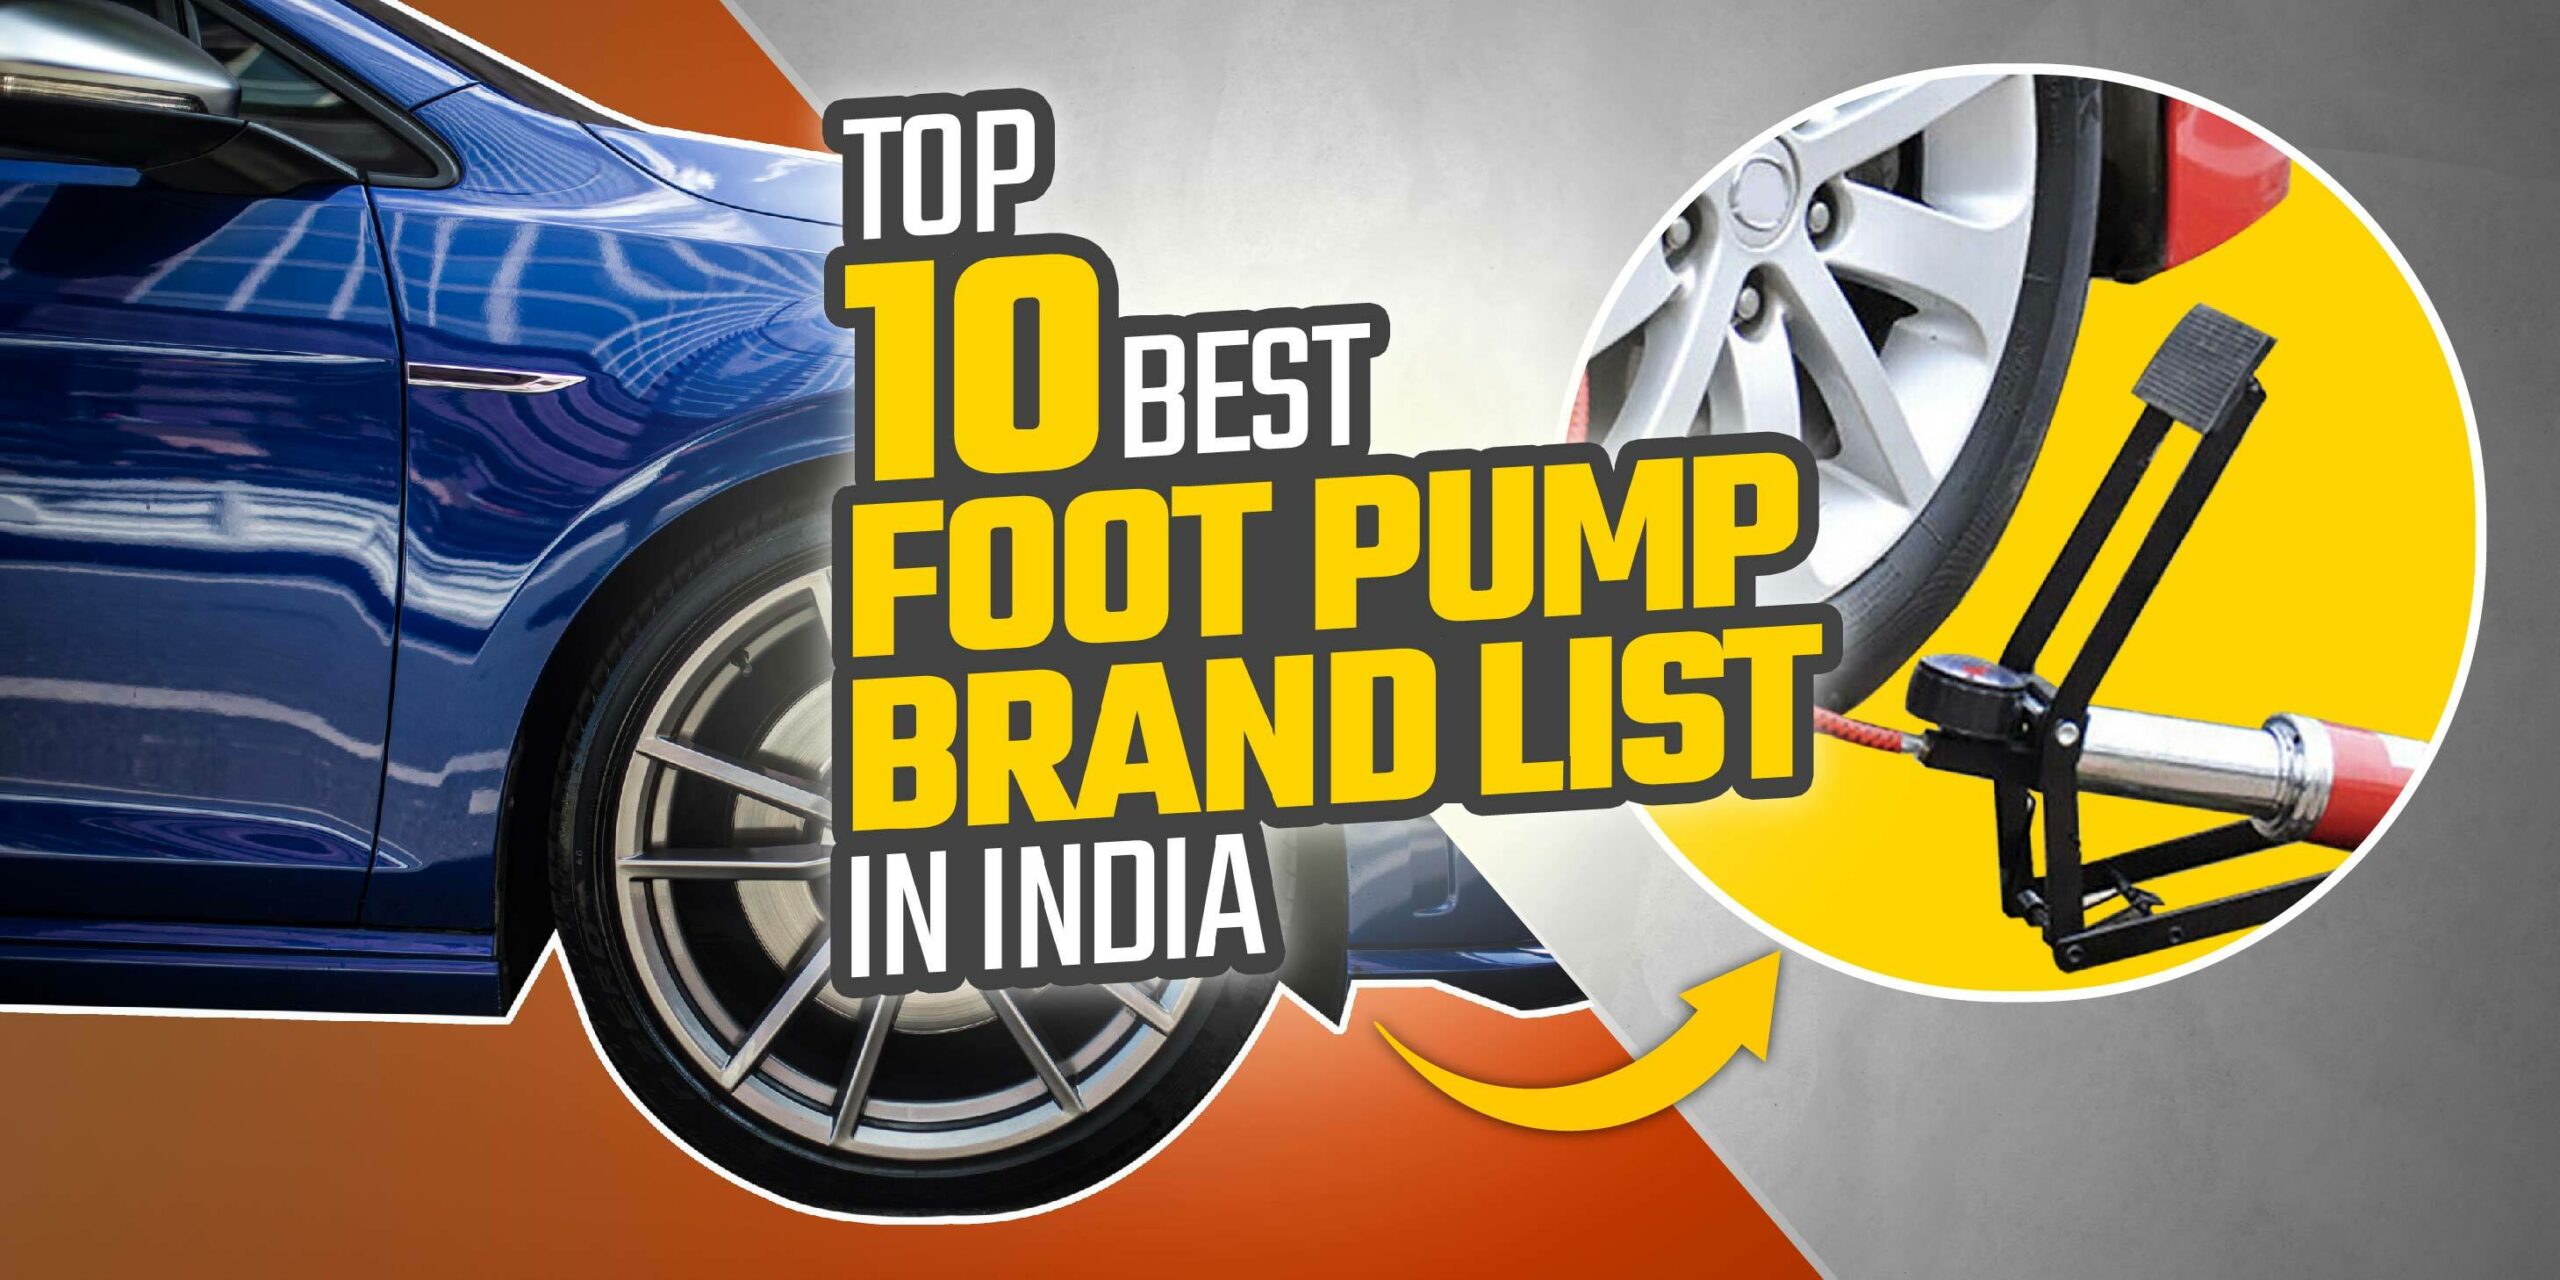 Top 10 Best Foot Pump Brand List In India